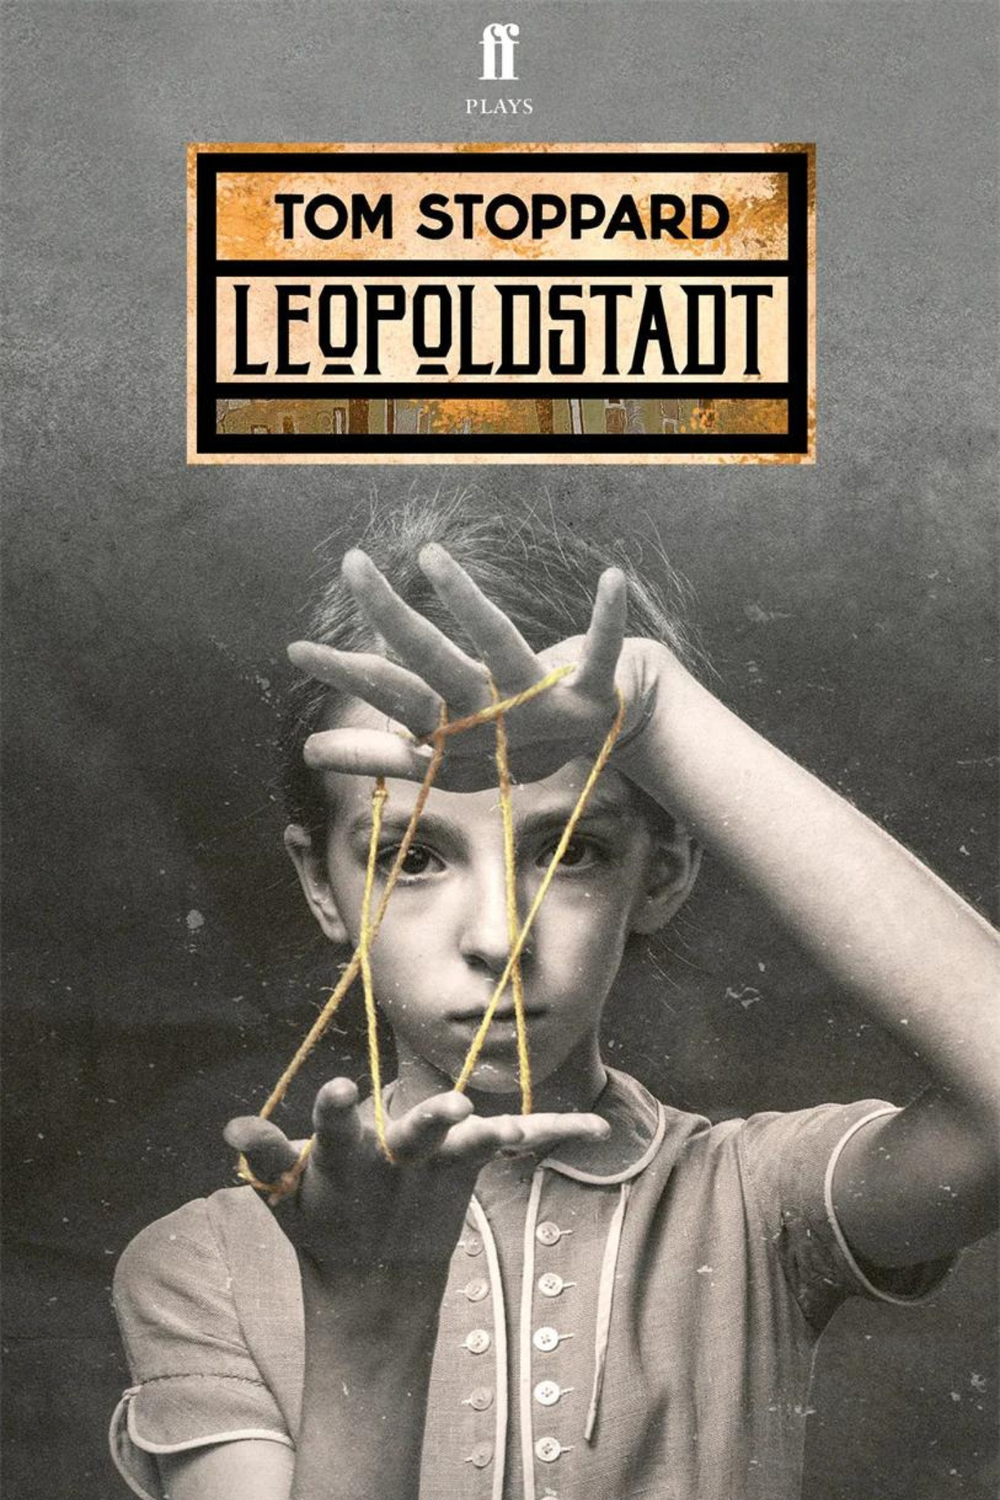 Tom Stoppard, Leopoldstadt Poster.png